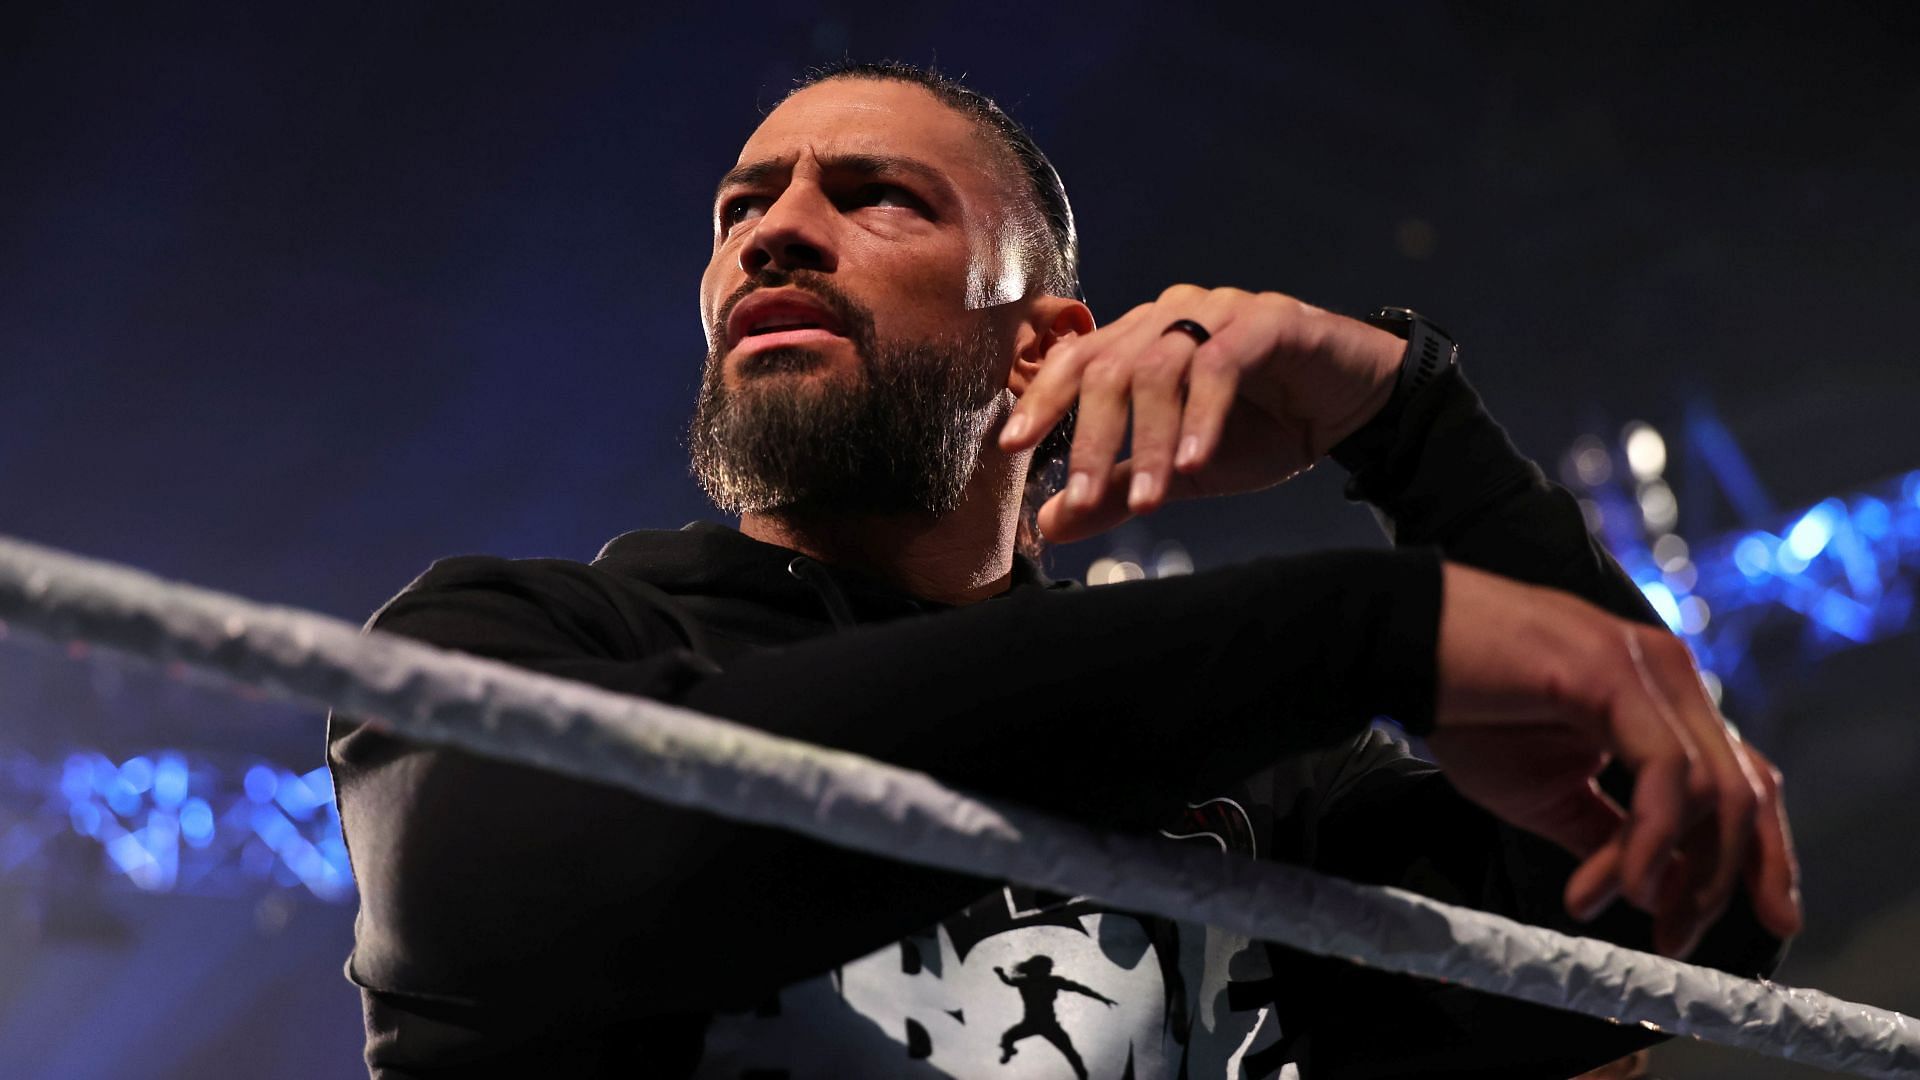 Roman Reigns is not happy on WWE SmackDown